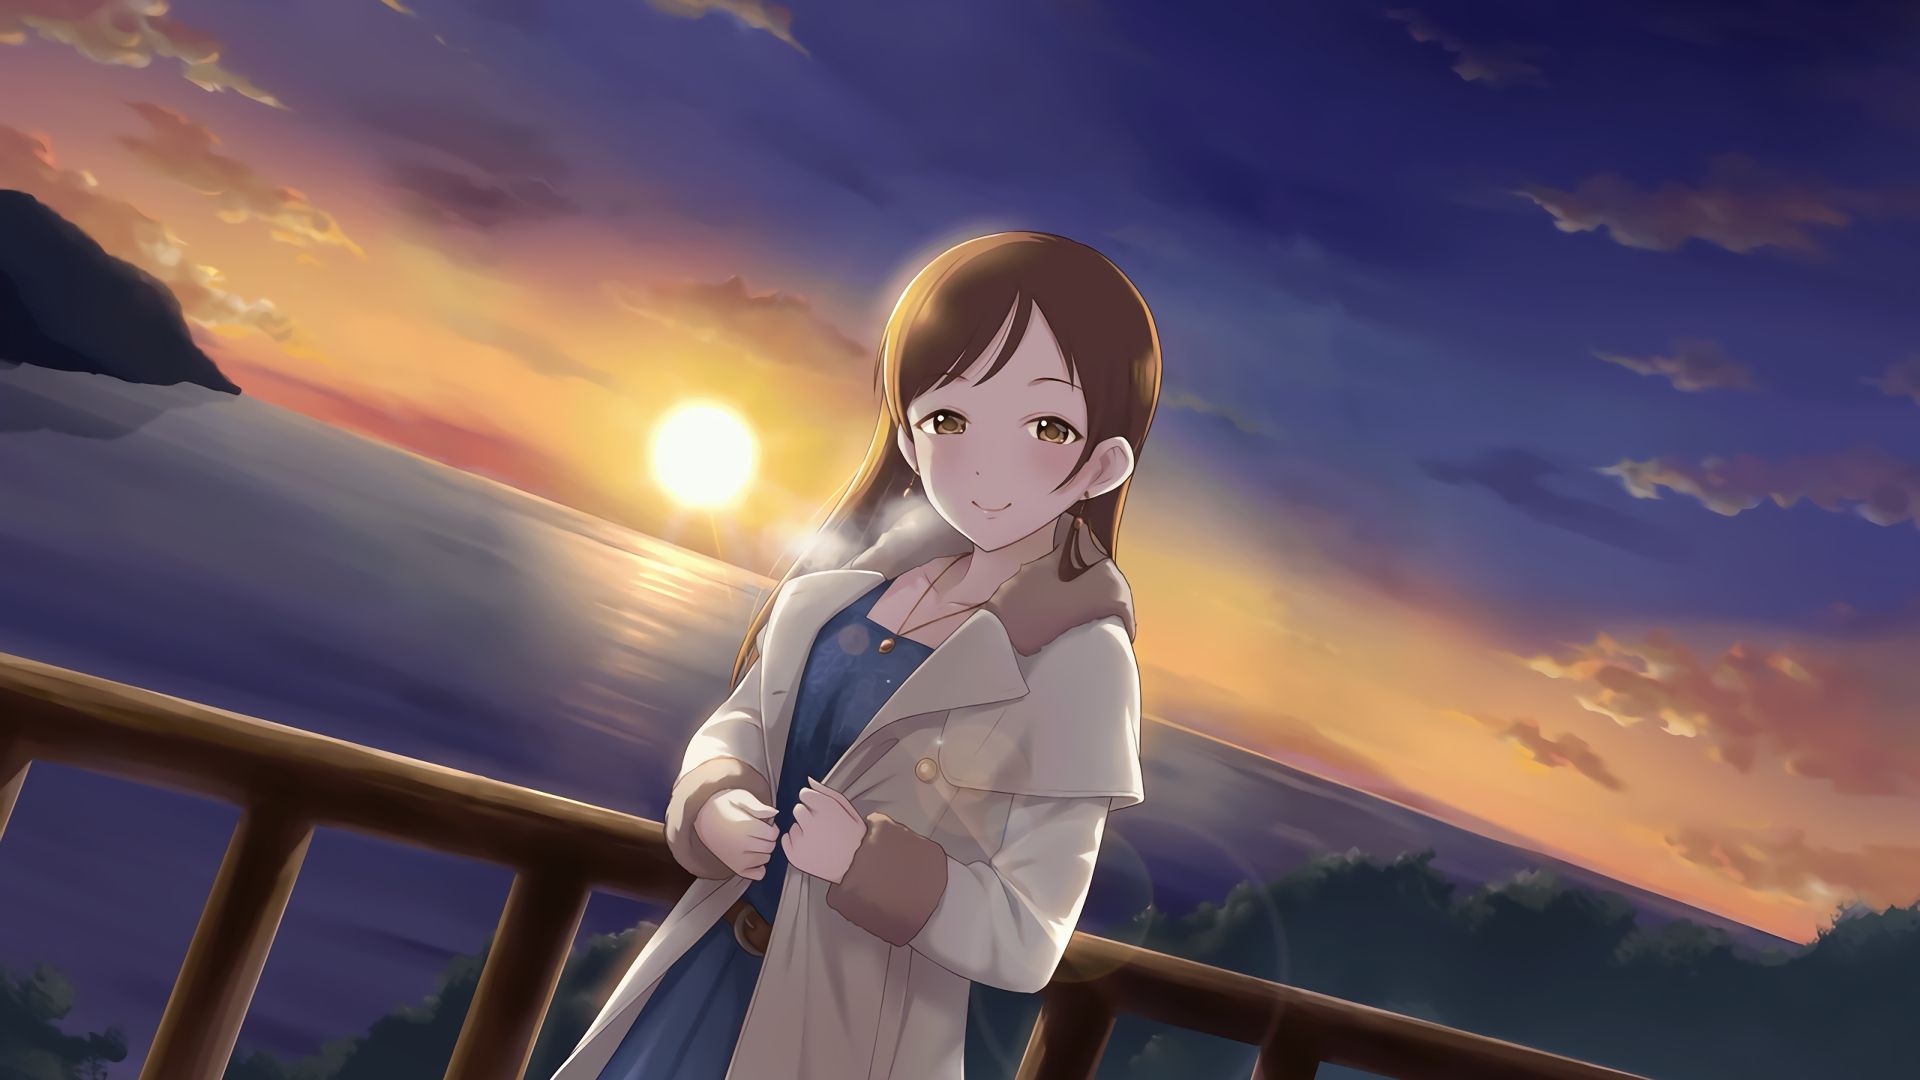 Wallpaper Minami Nitta, cute, anime girl, sunset